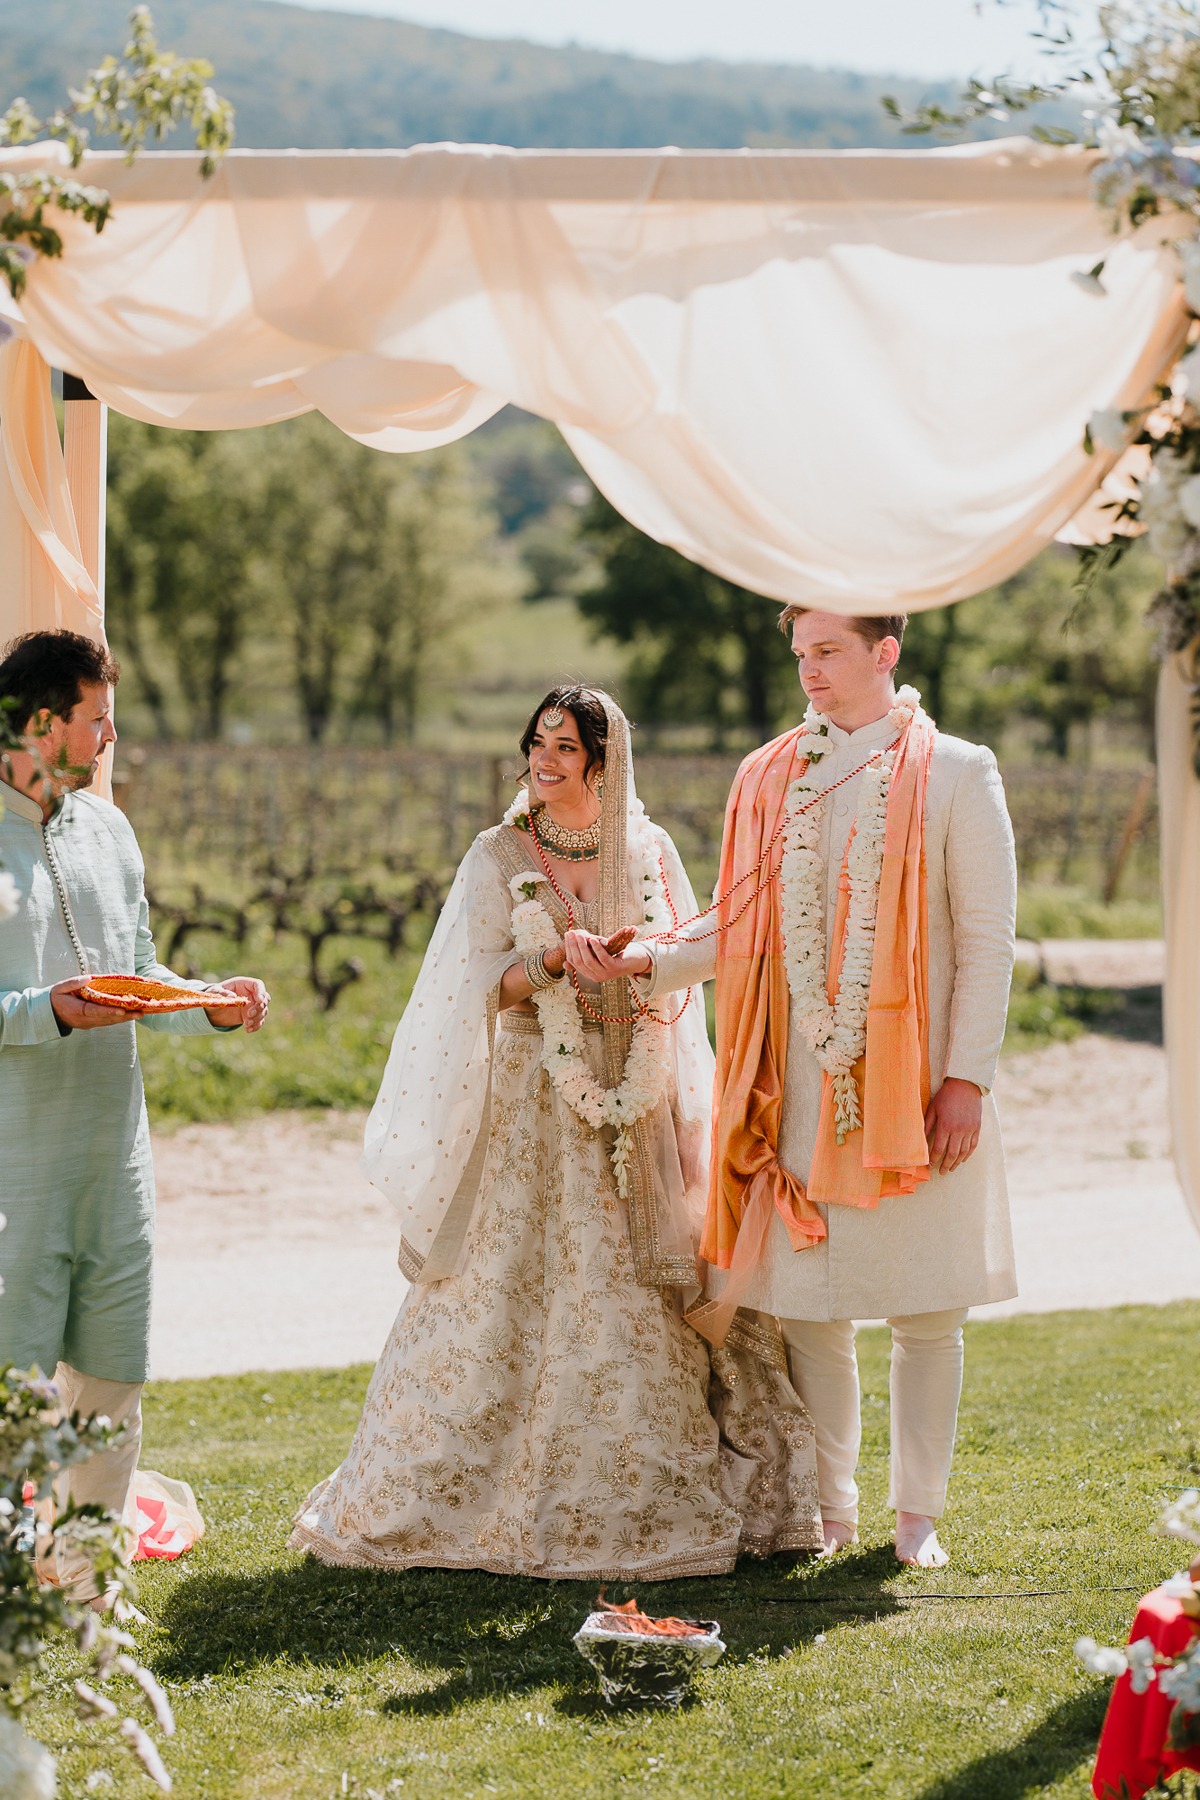 Hindi wedding traditions